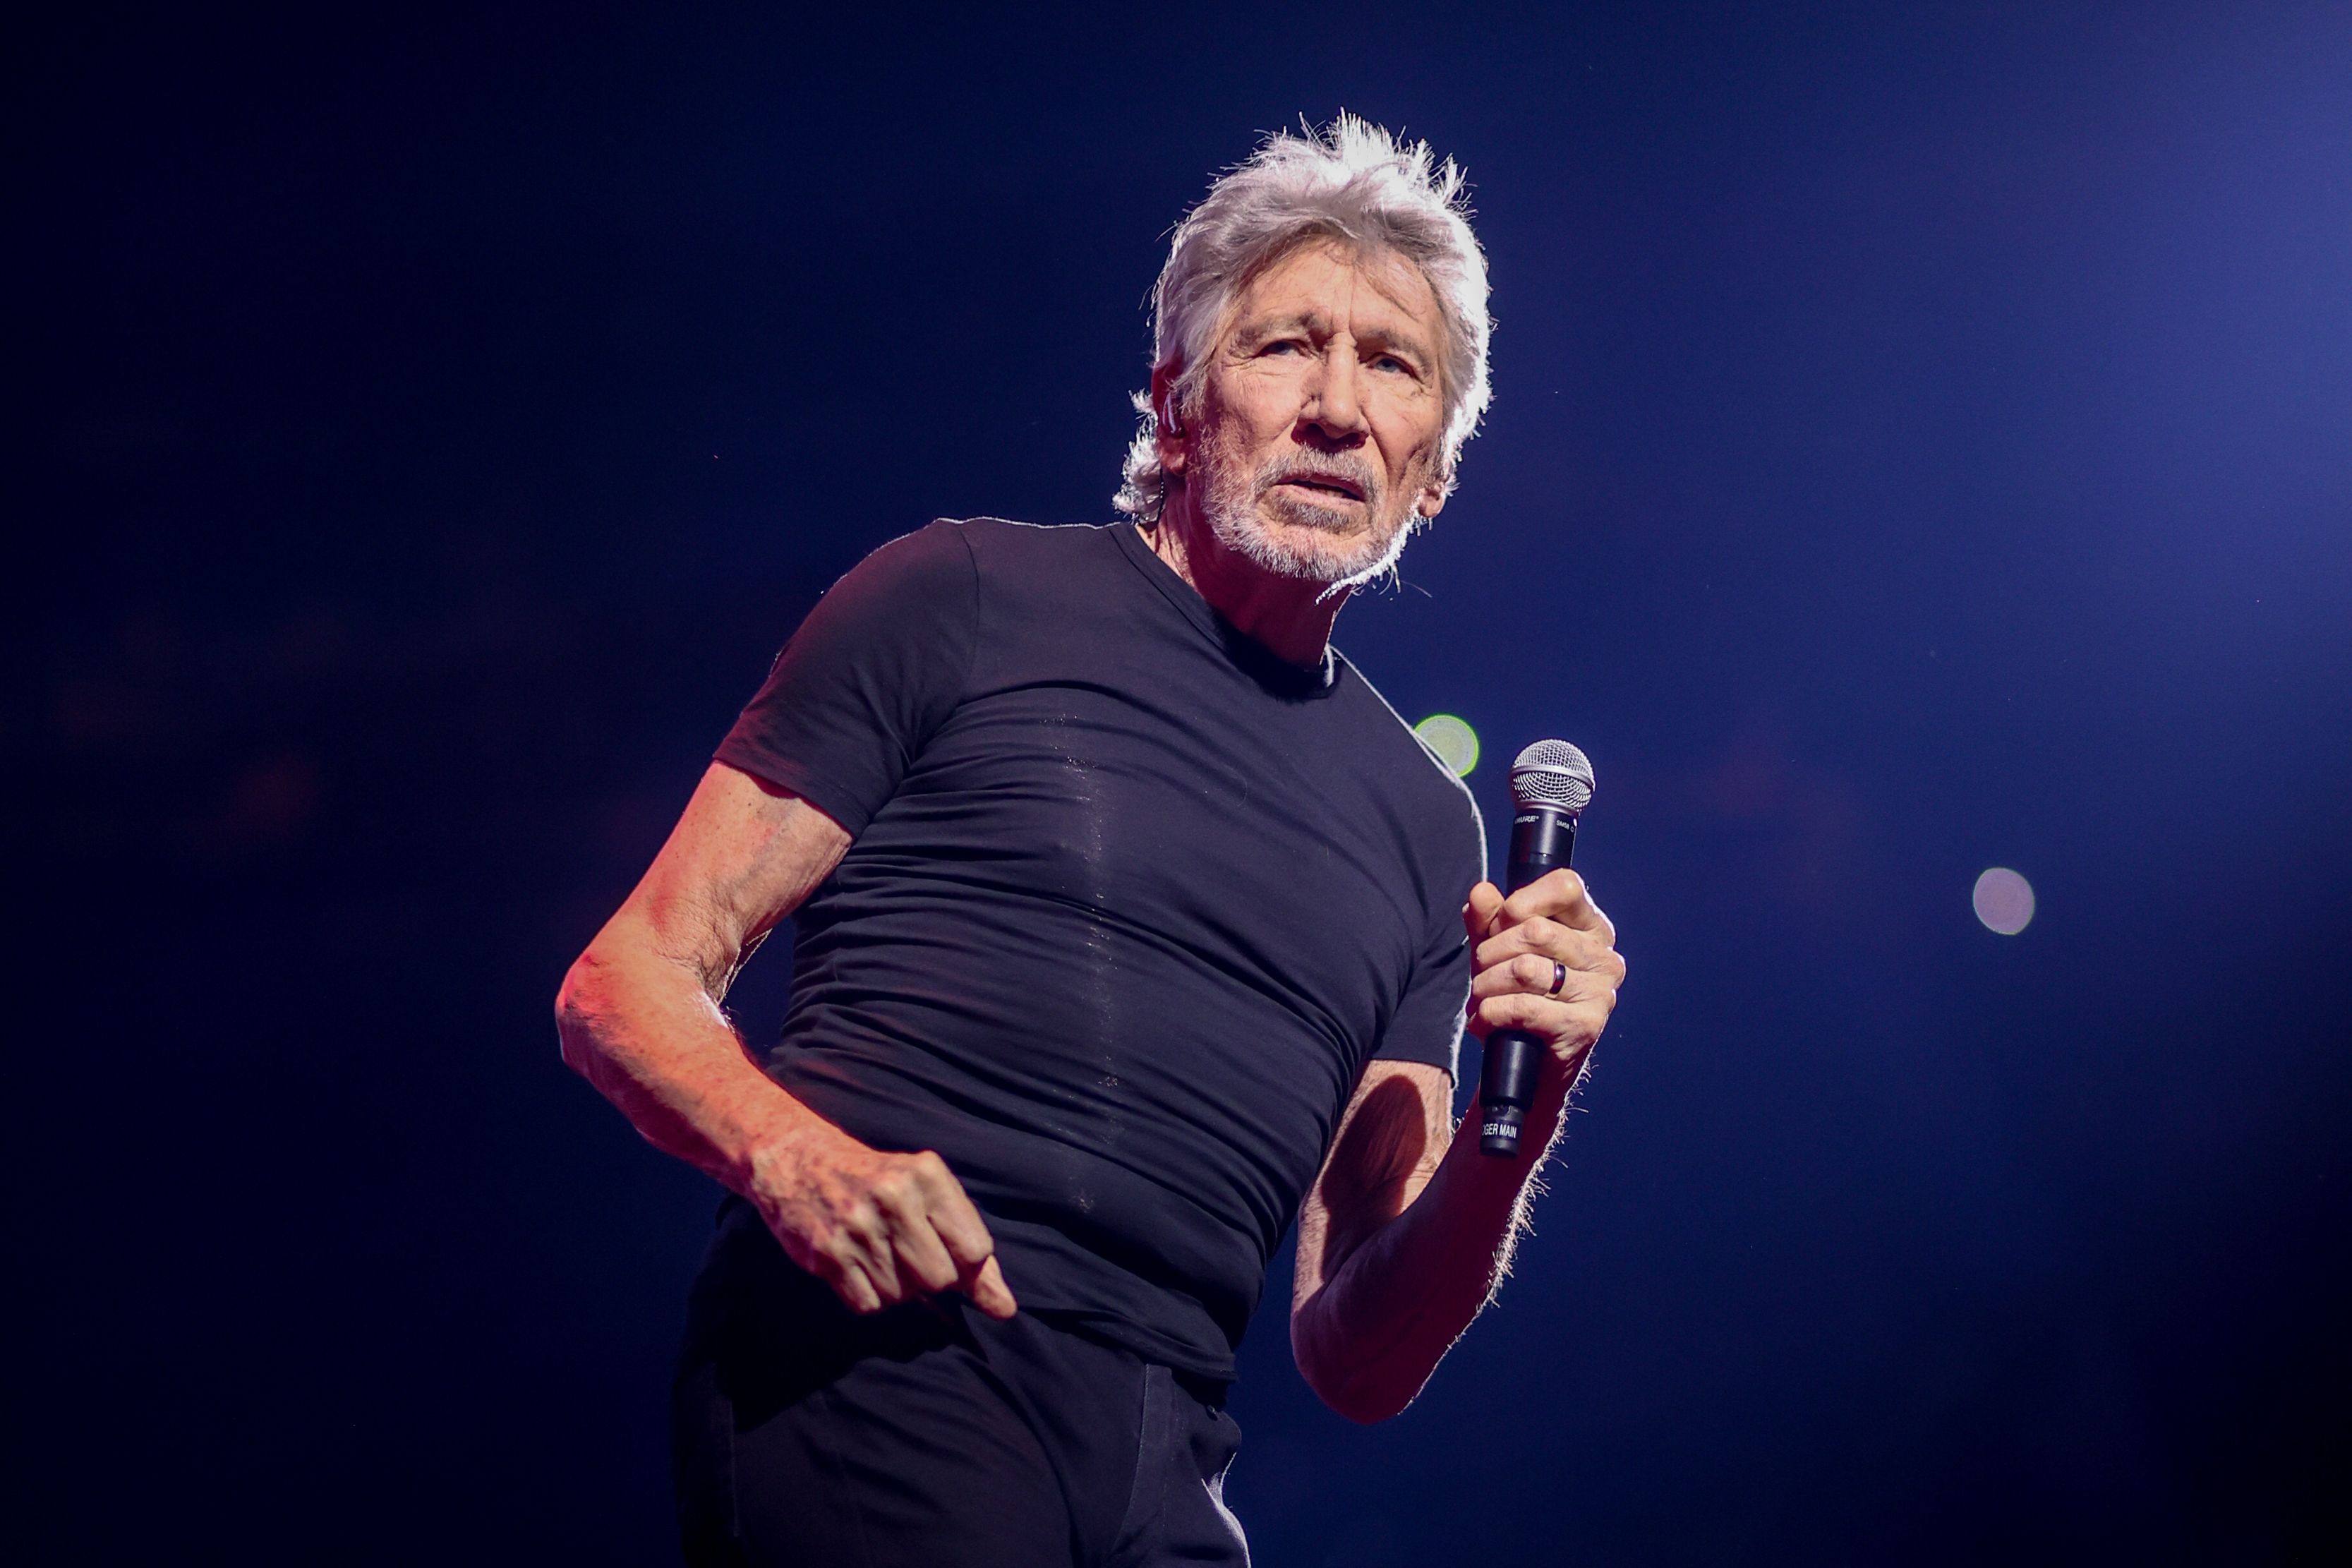 La Fiscalía alemana investiga a Roger Waters (Pink Floyd) por llevar un traje %22similar%22 al de las SS